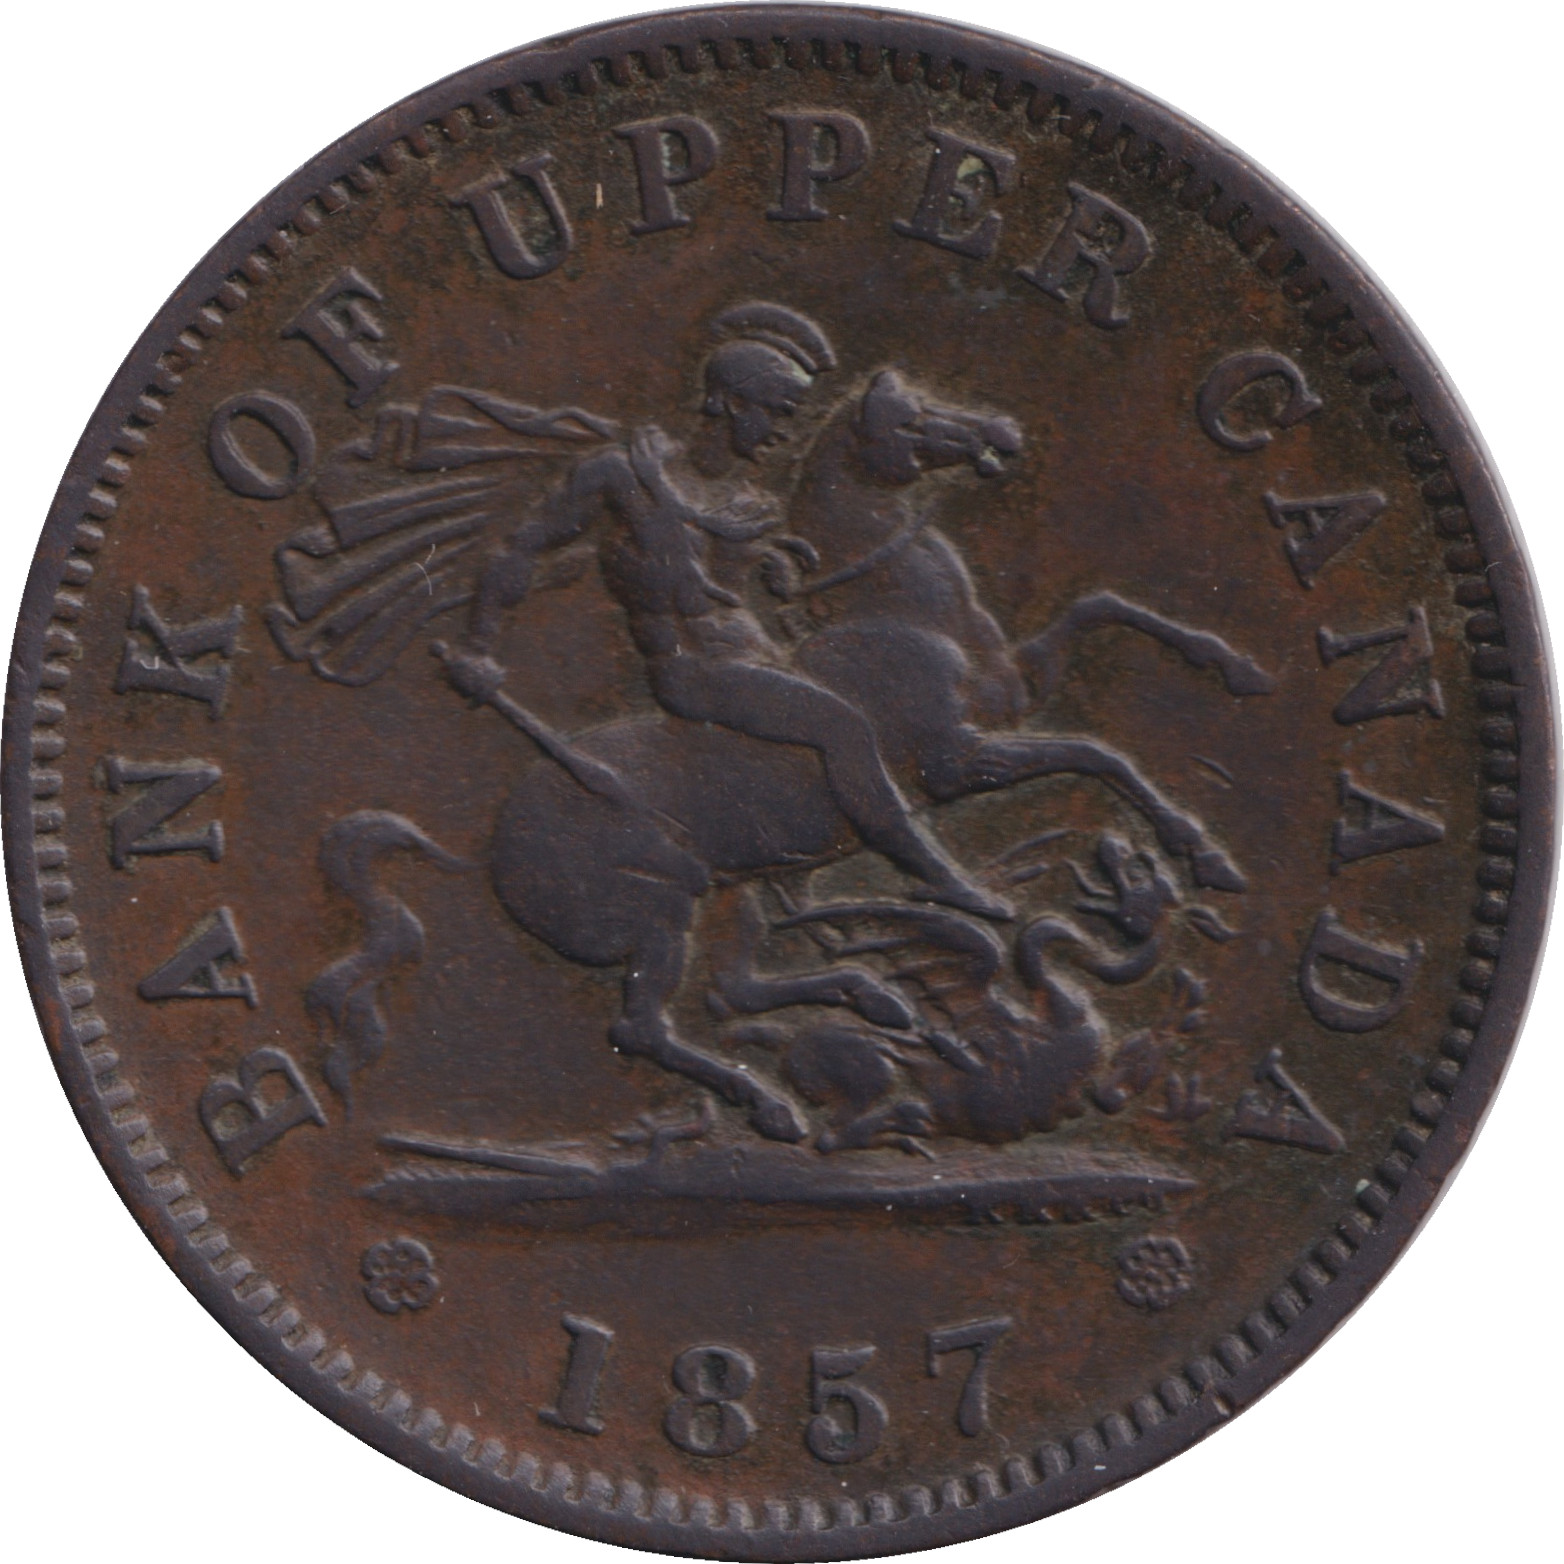 1 penny - Chevalier